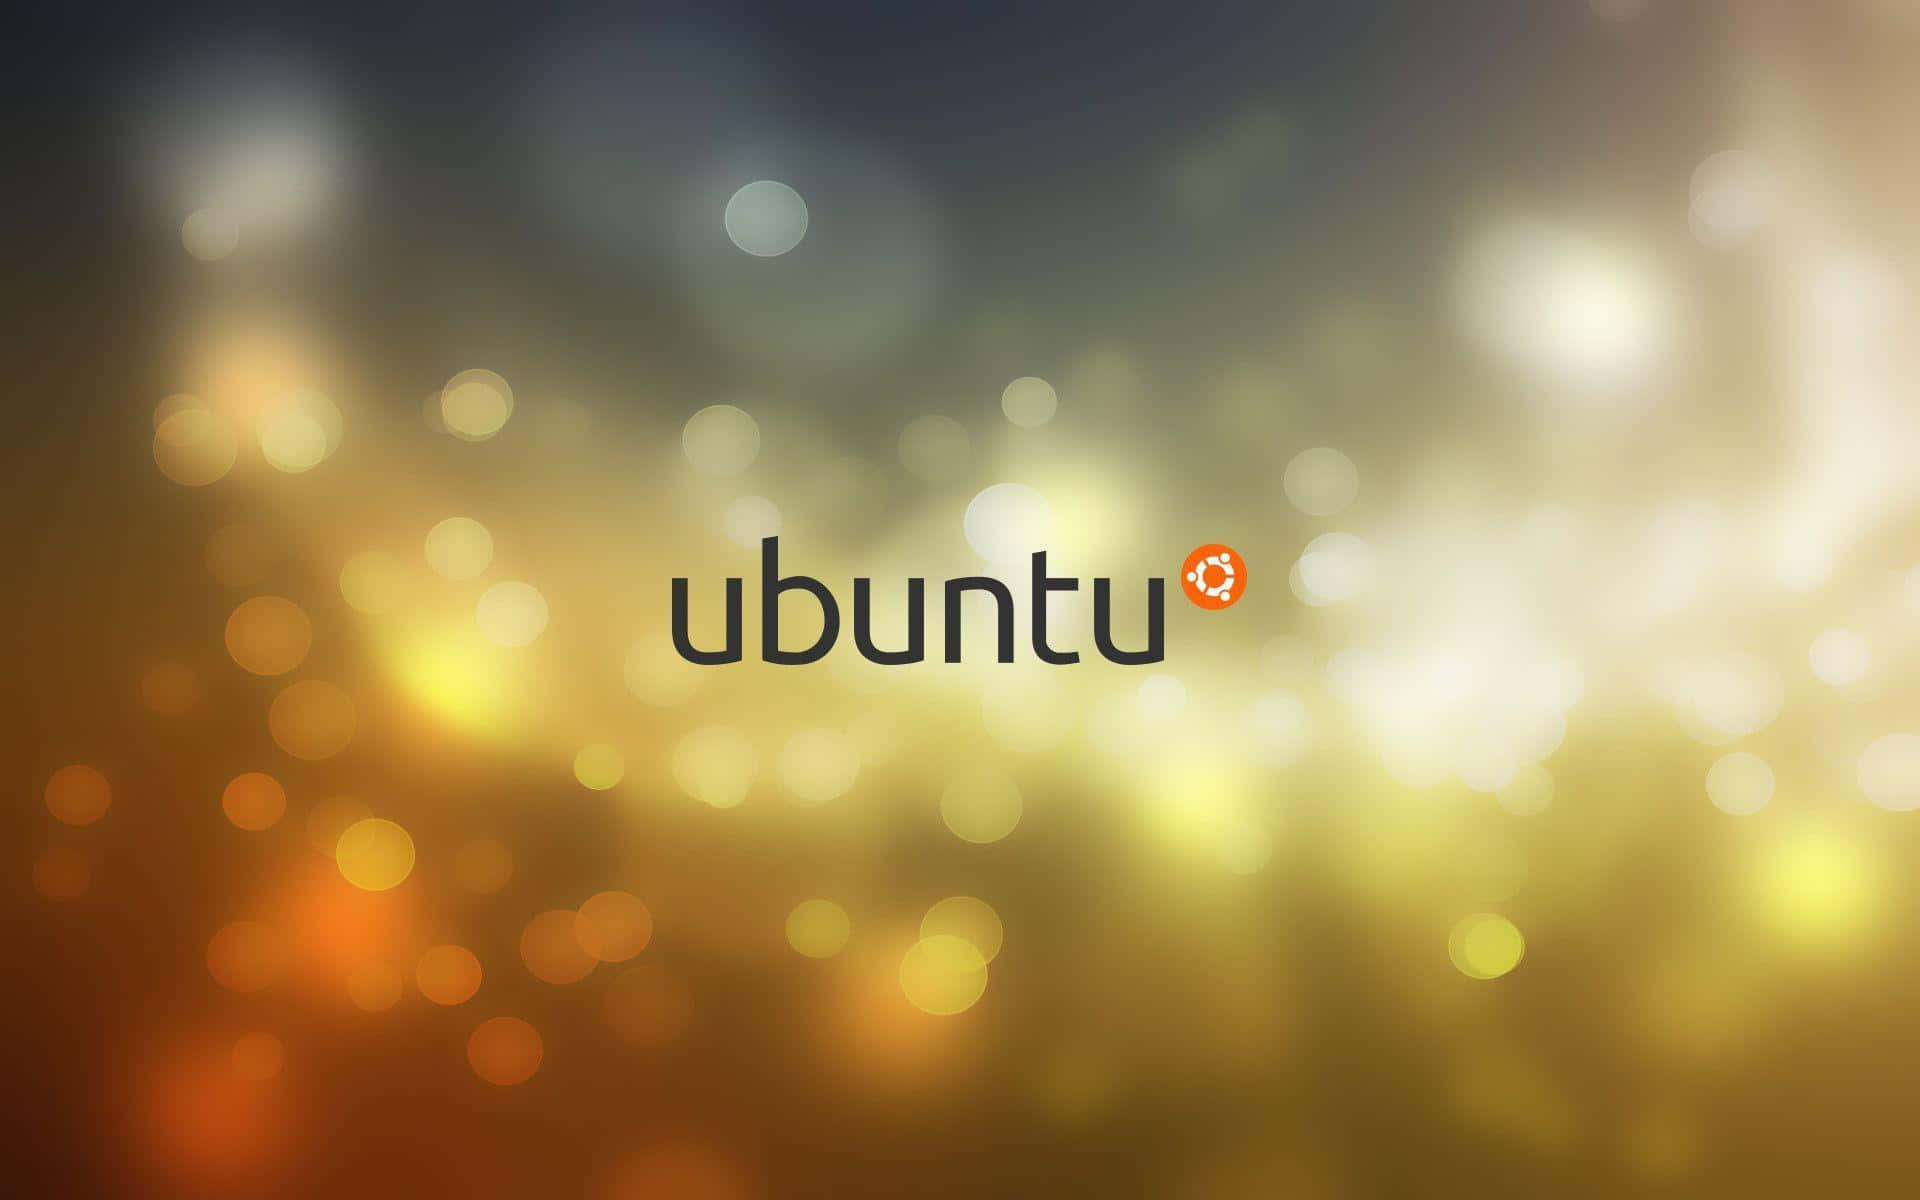 "Discover the power of Ubuntu"